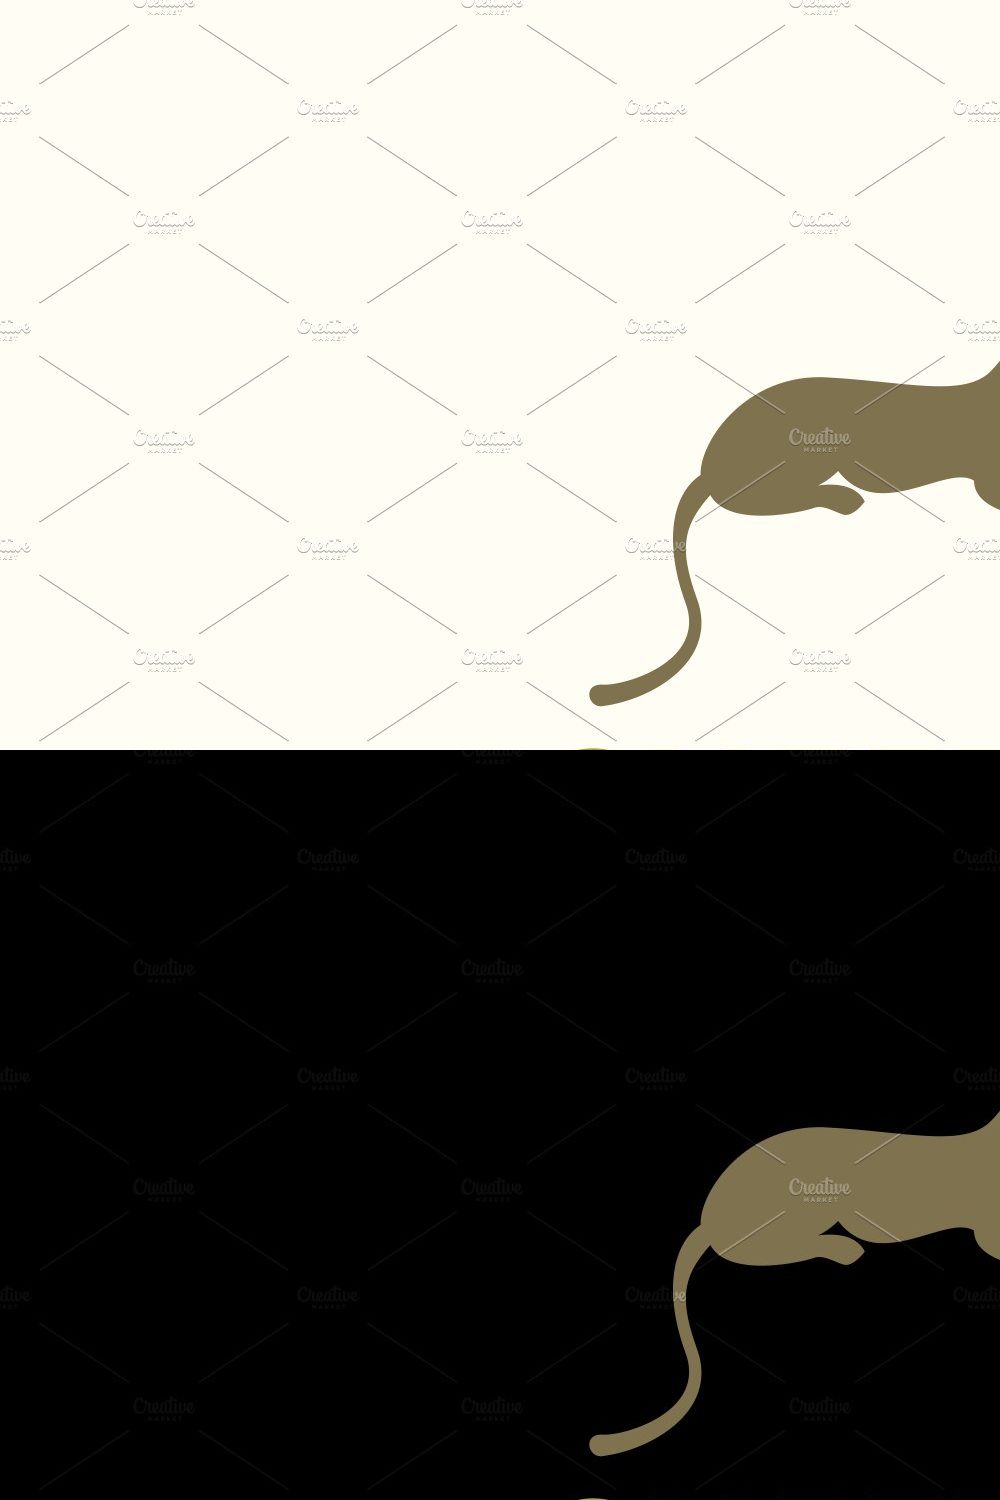 Cheetah Logo pinterest preview image.